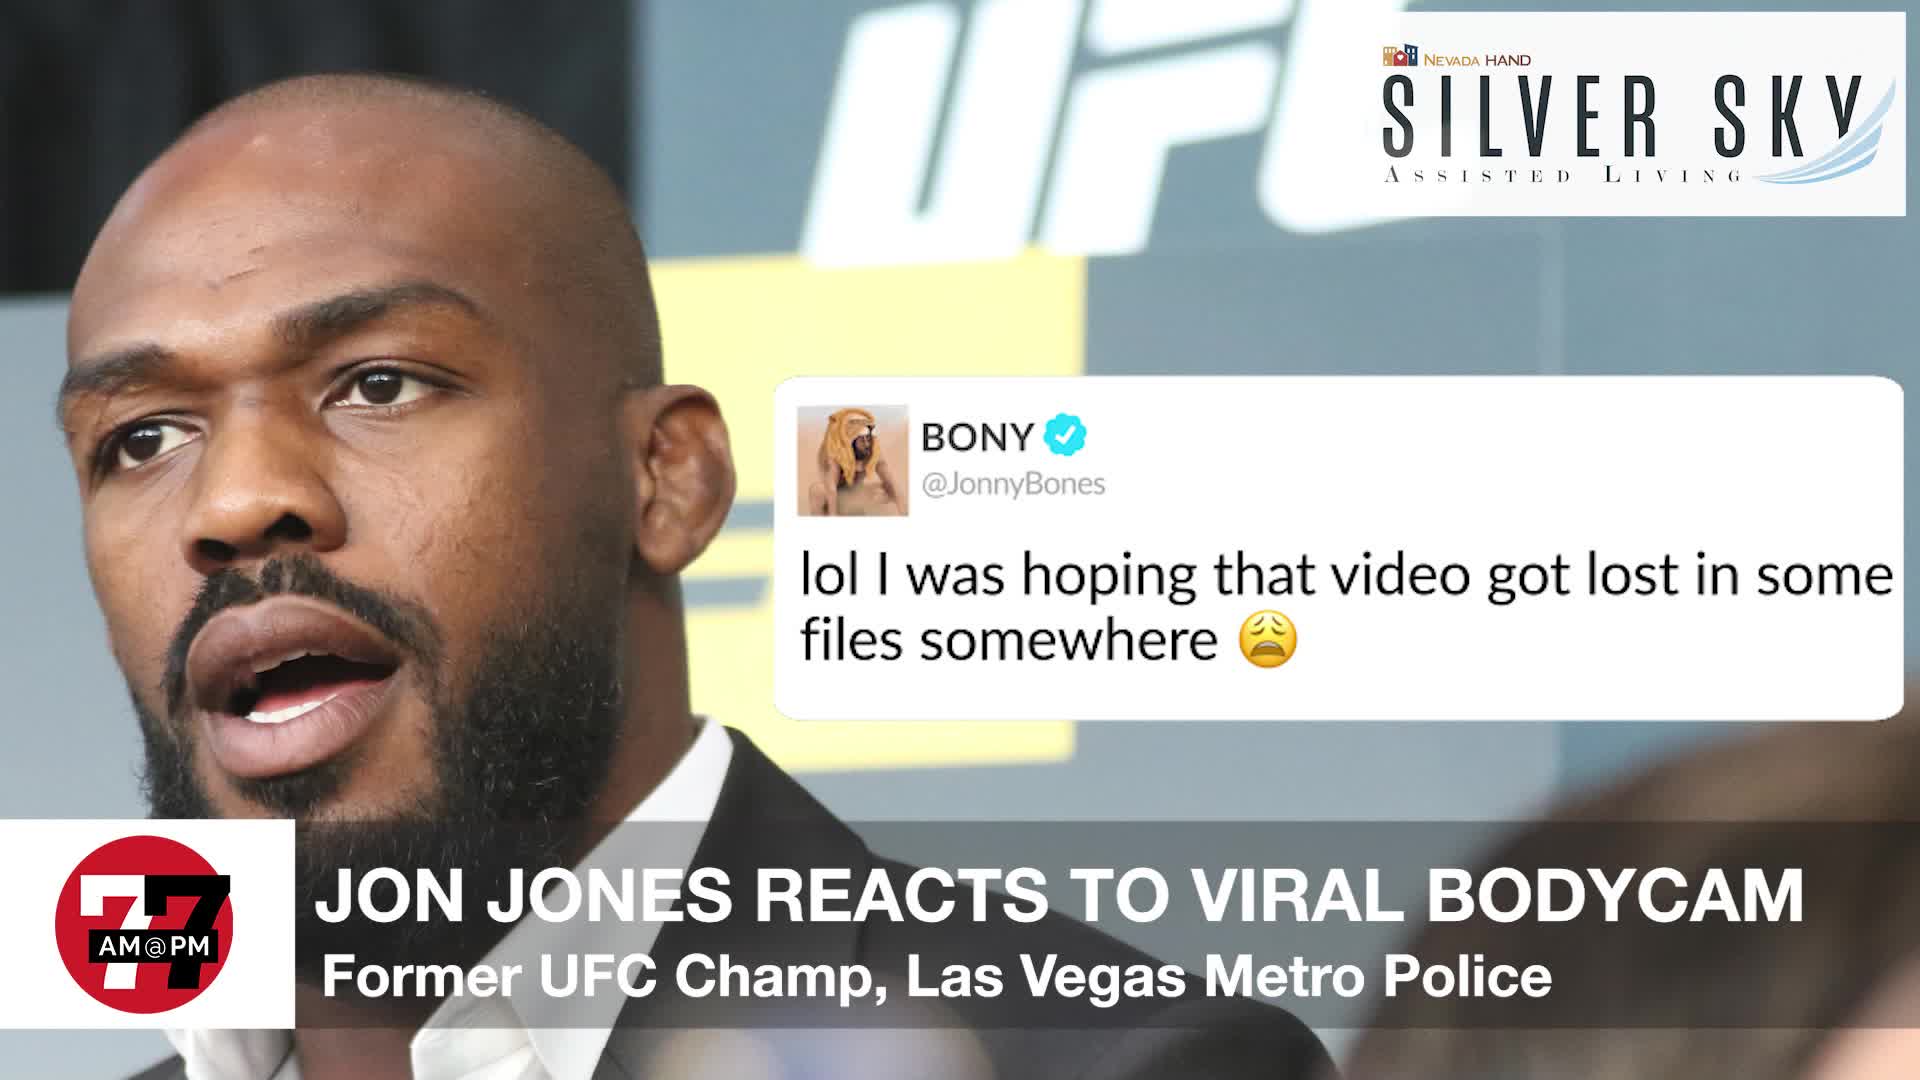 Jon Jones comments on Strip arrest video